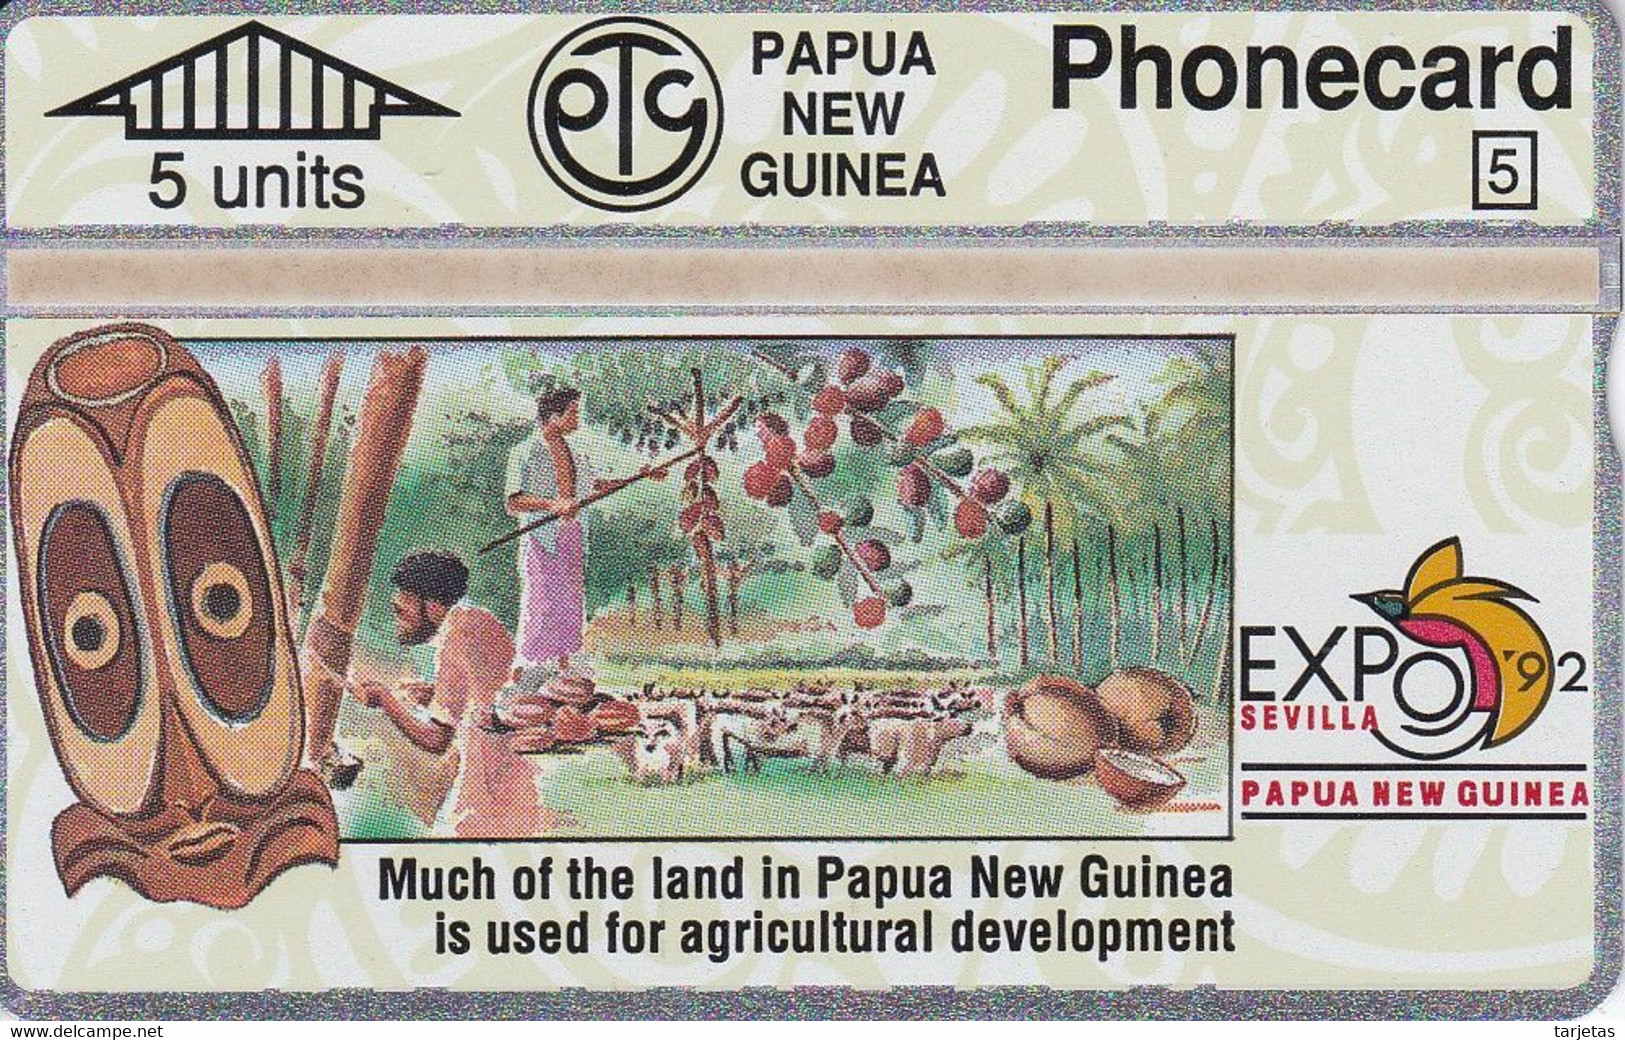 TARJETA DE PAPUA Y NUEVA GUINEA EXPO 92 SEVILLA (203A) (NUEVA-MINT) - Papua-Neuguinea